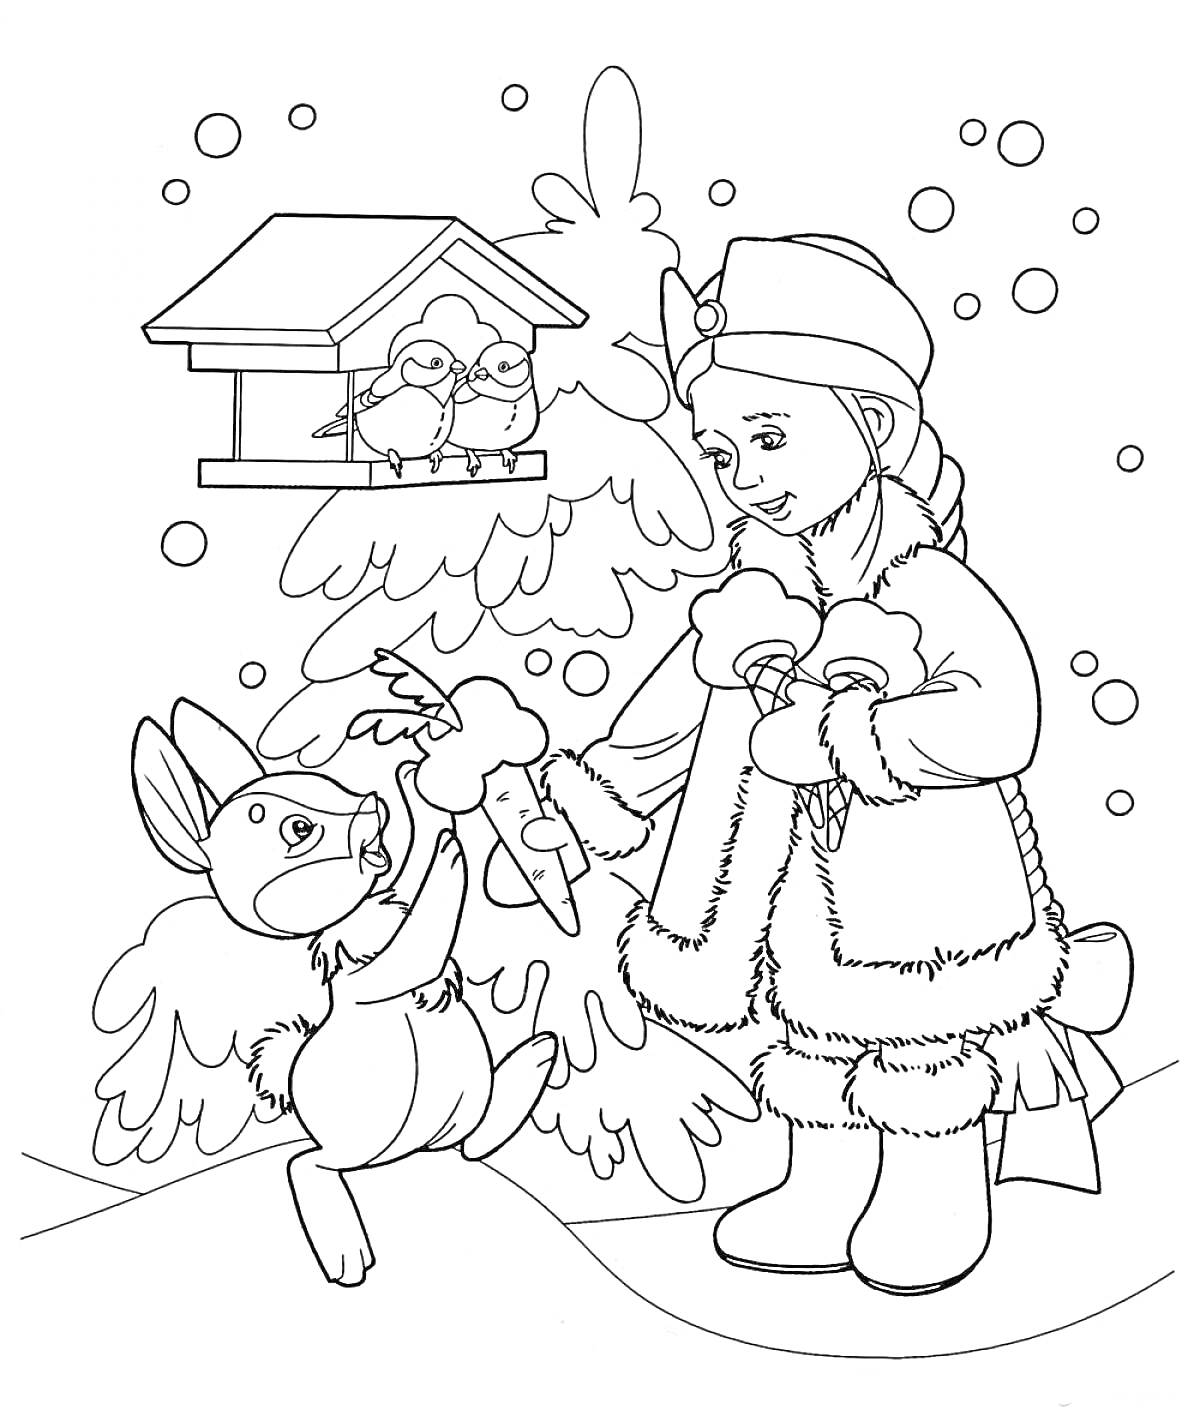 Снегурочка с зайчиком у кормушки под ёлкой